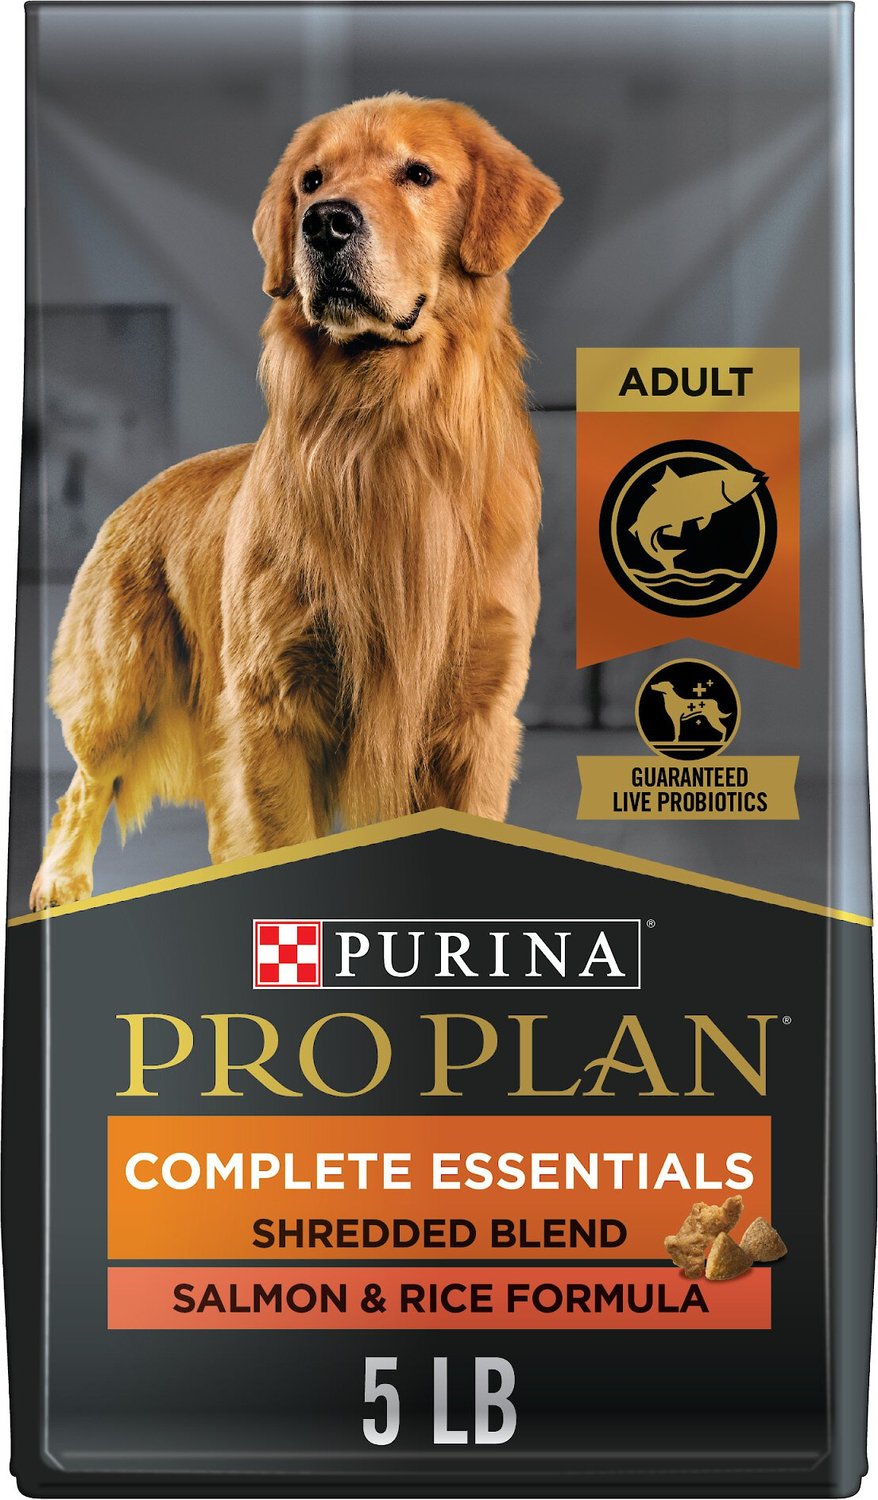 purina pro plan adult dog food